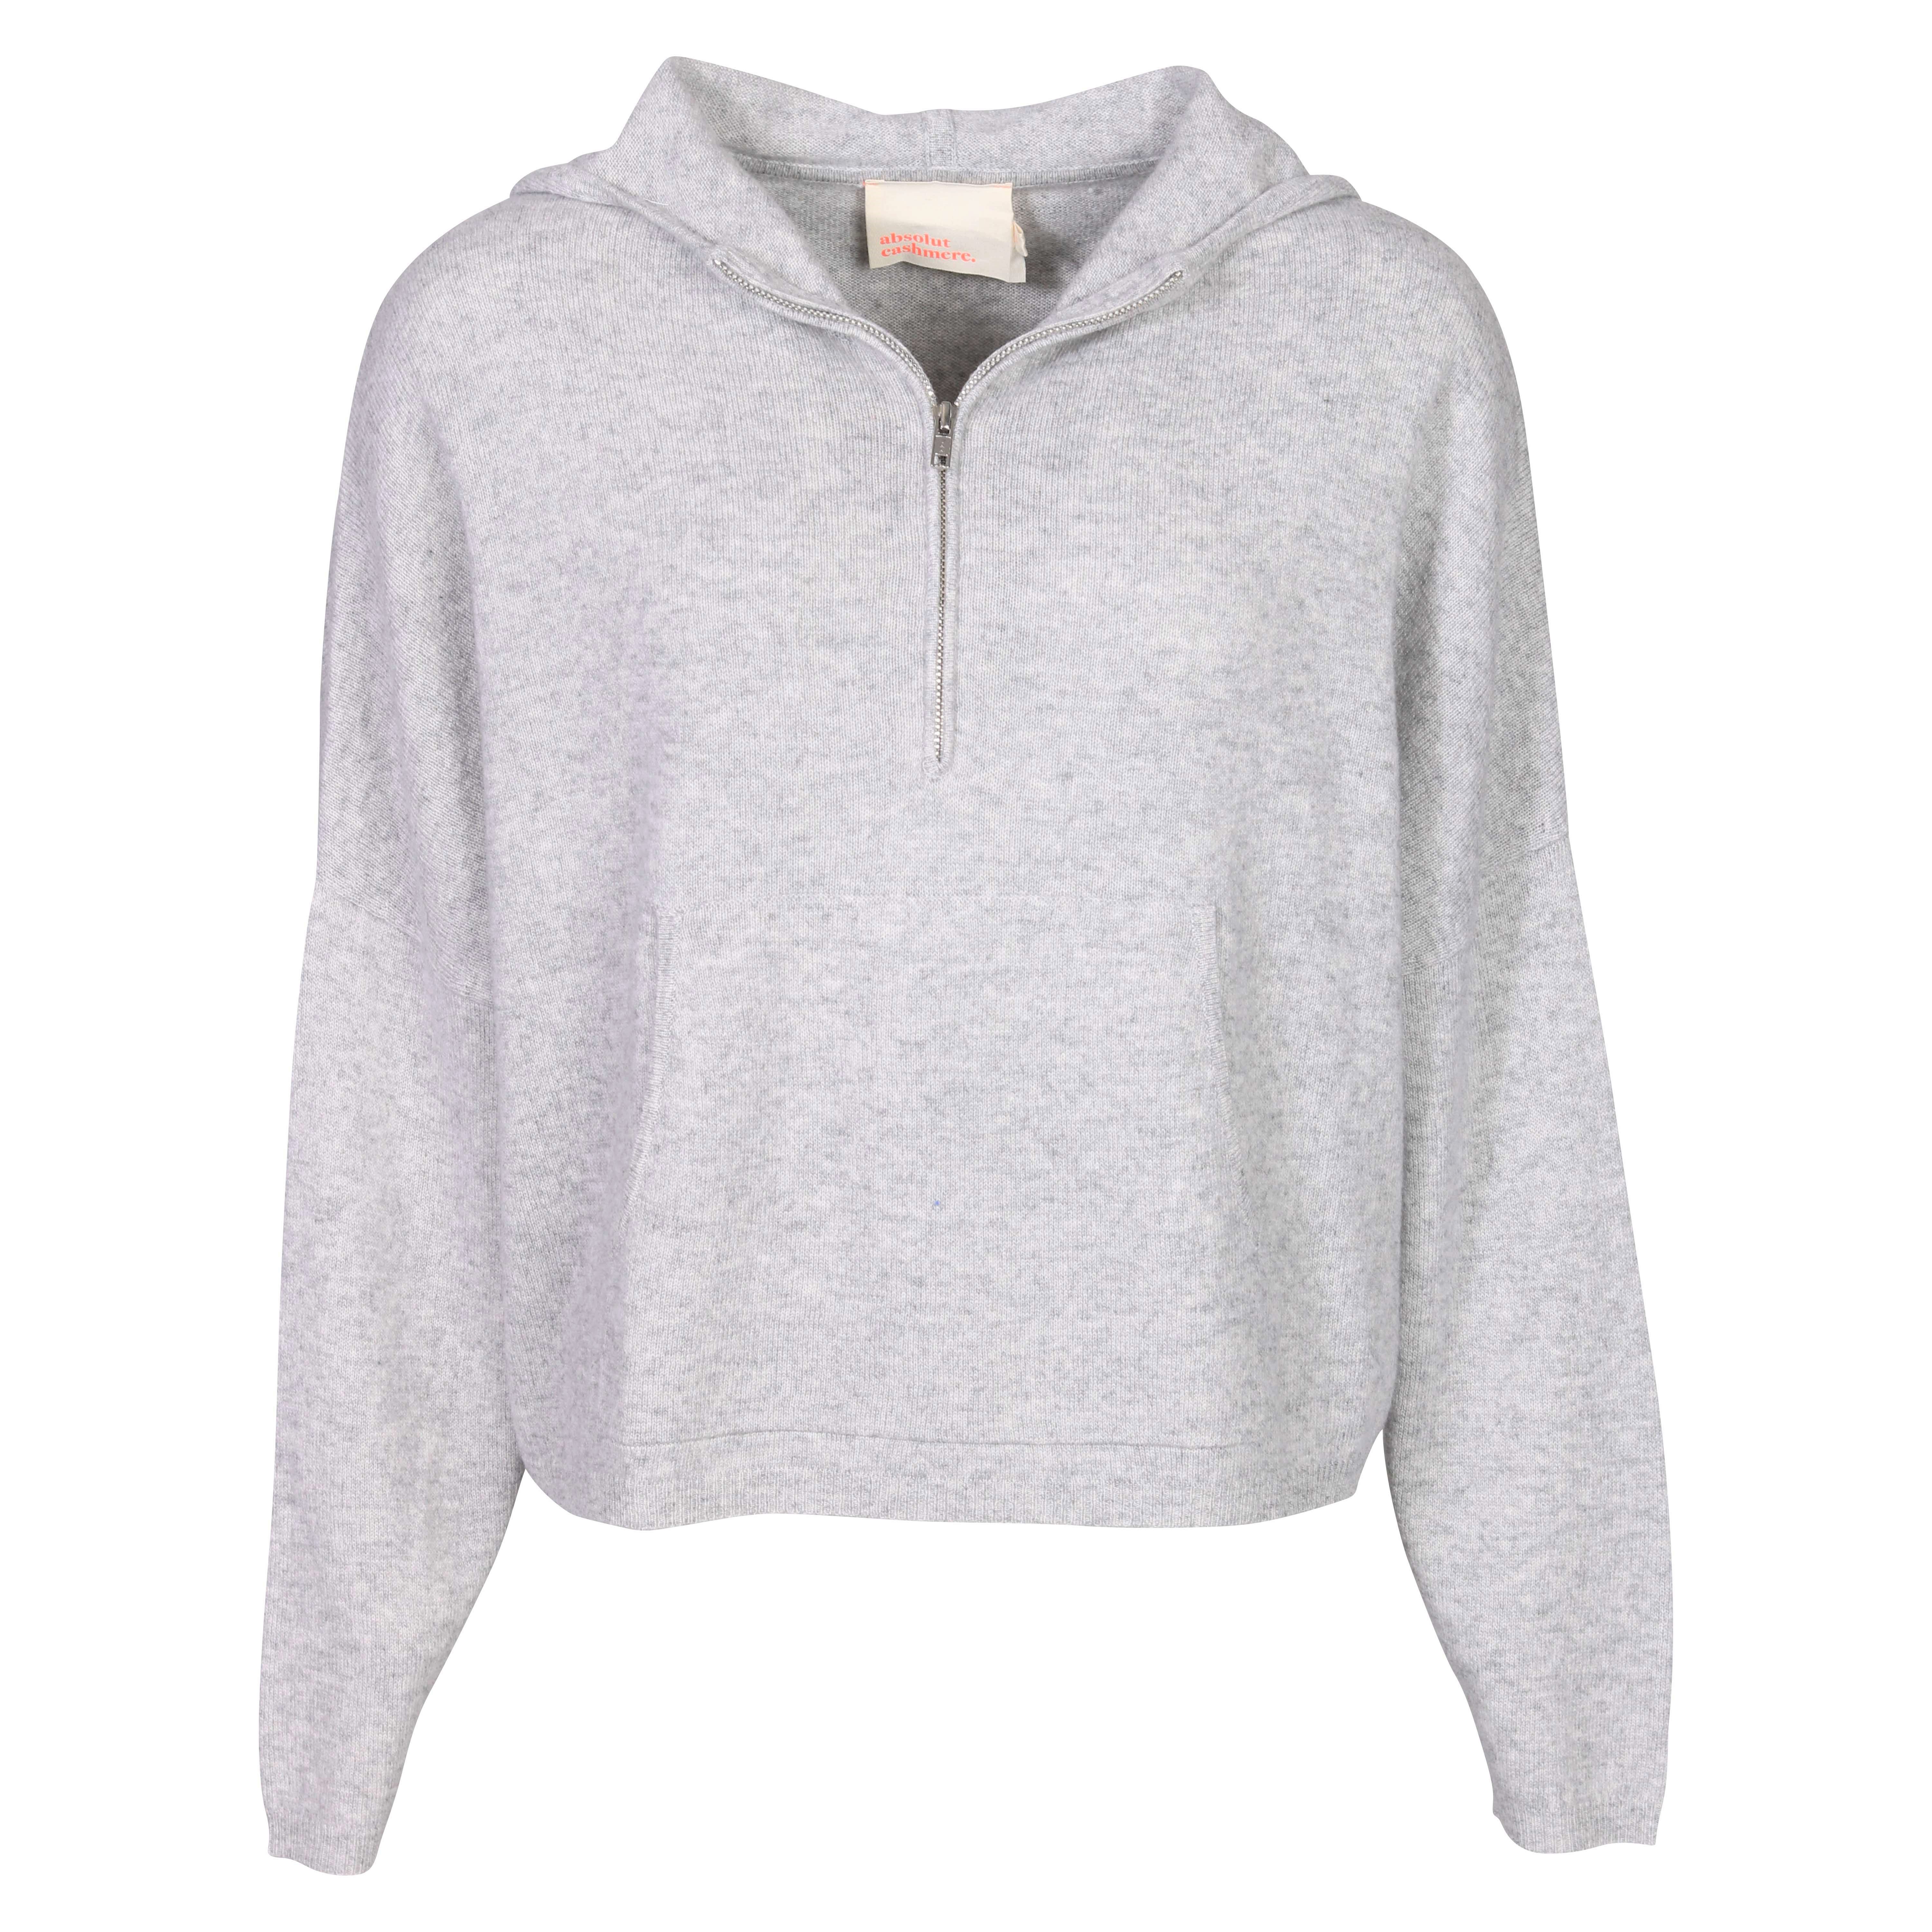 Absolut Cashmere Half Zip Hodded Sweater in Light Grey Melange S